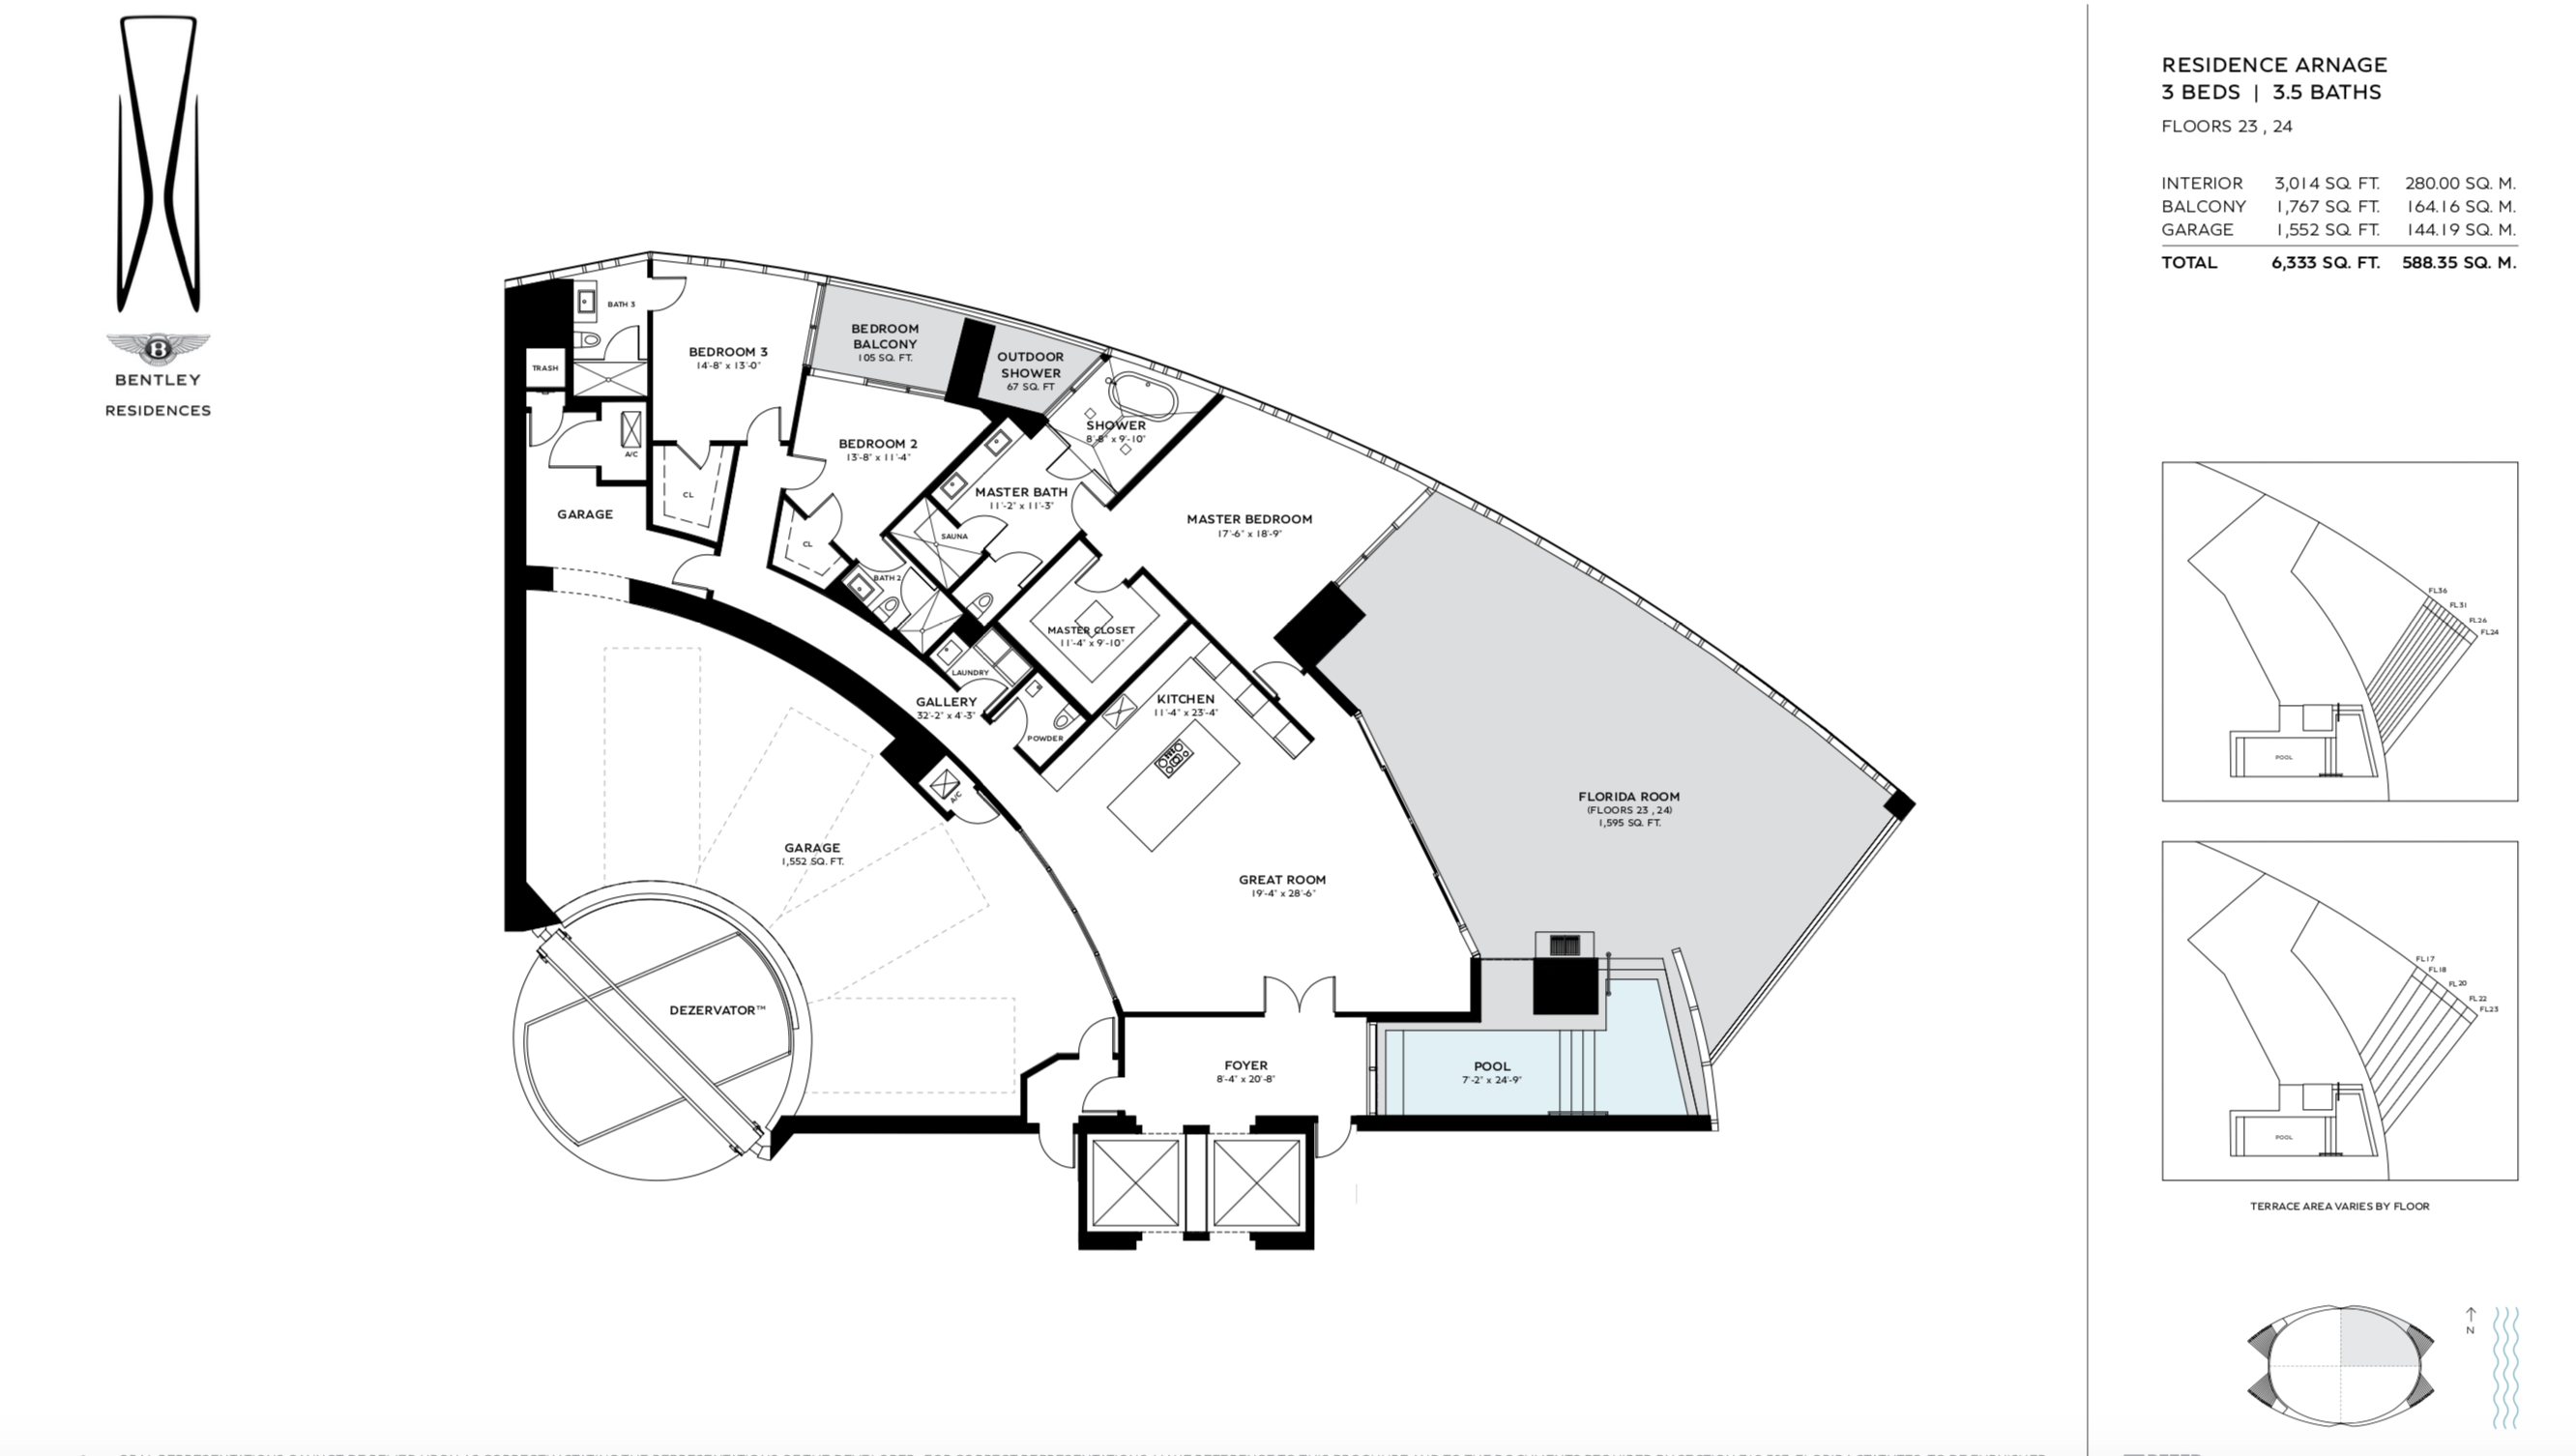 Bentley Residences Sunny Isles  | Residence Arnage | NE Exposure | 3 Be/3.5Ba | 3,014 SF | Floors 23 & 24